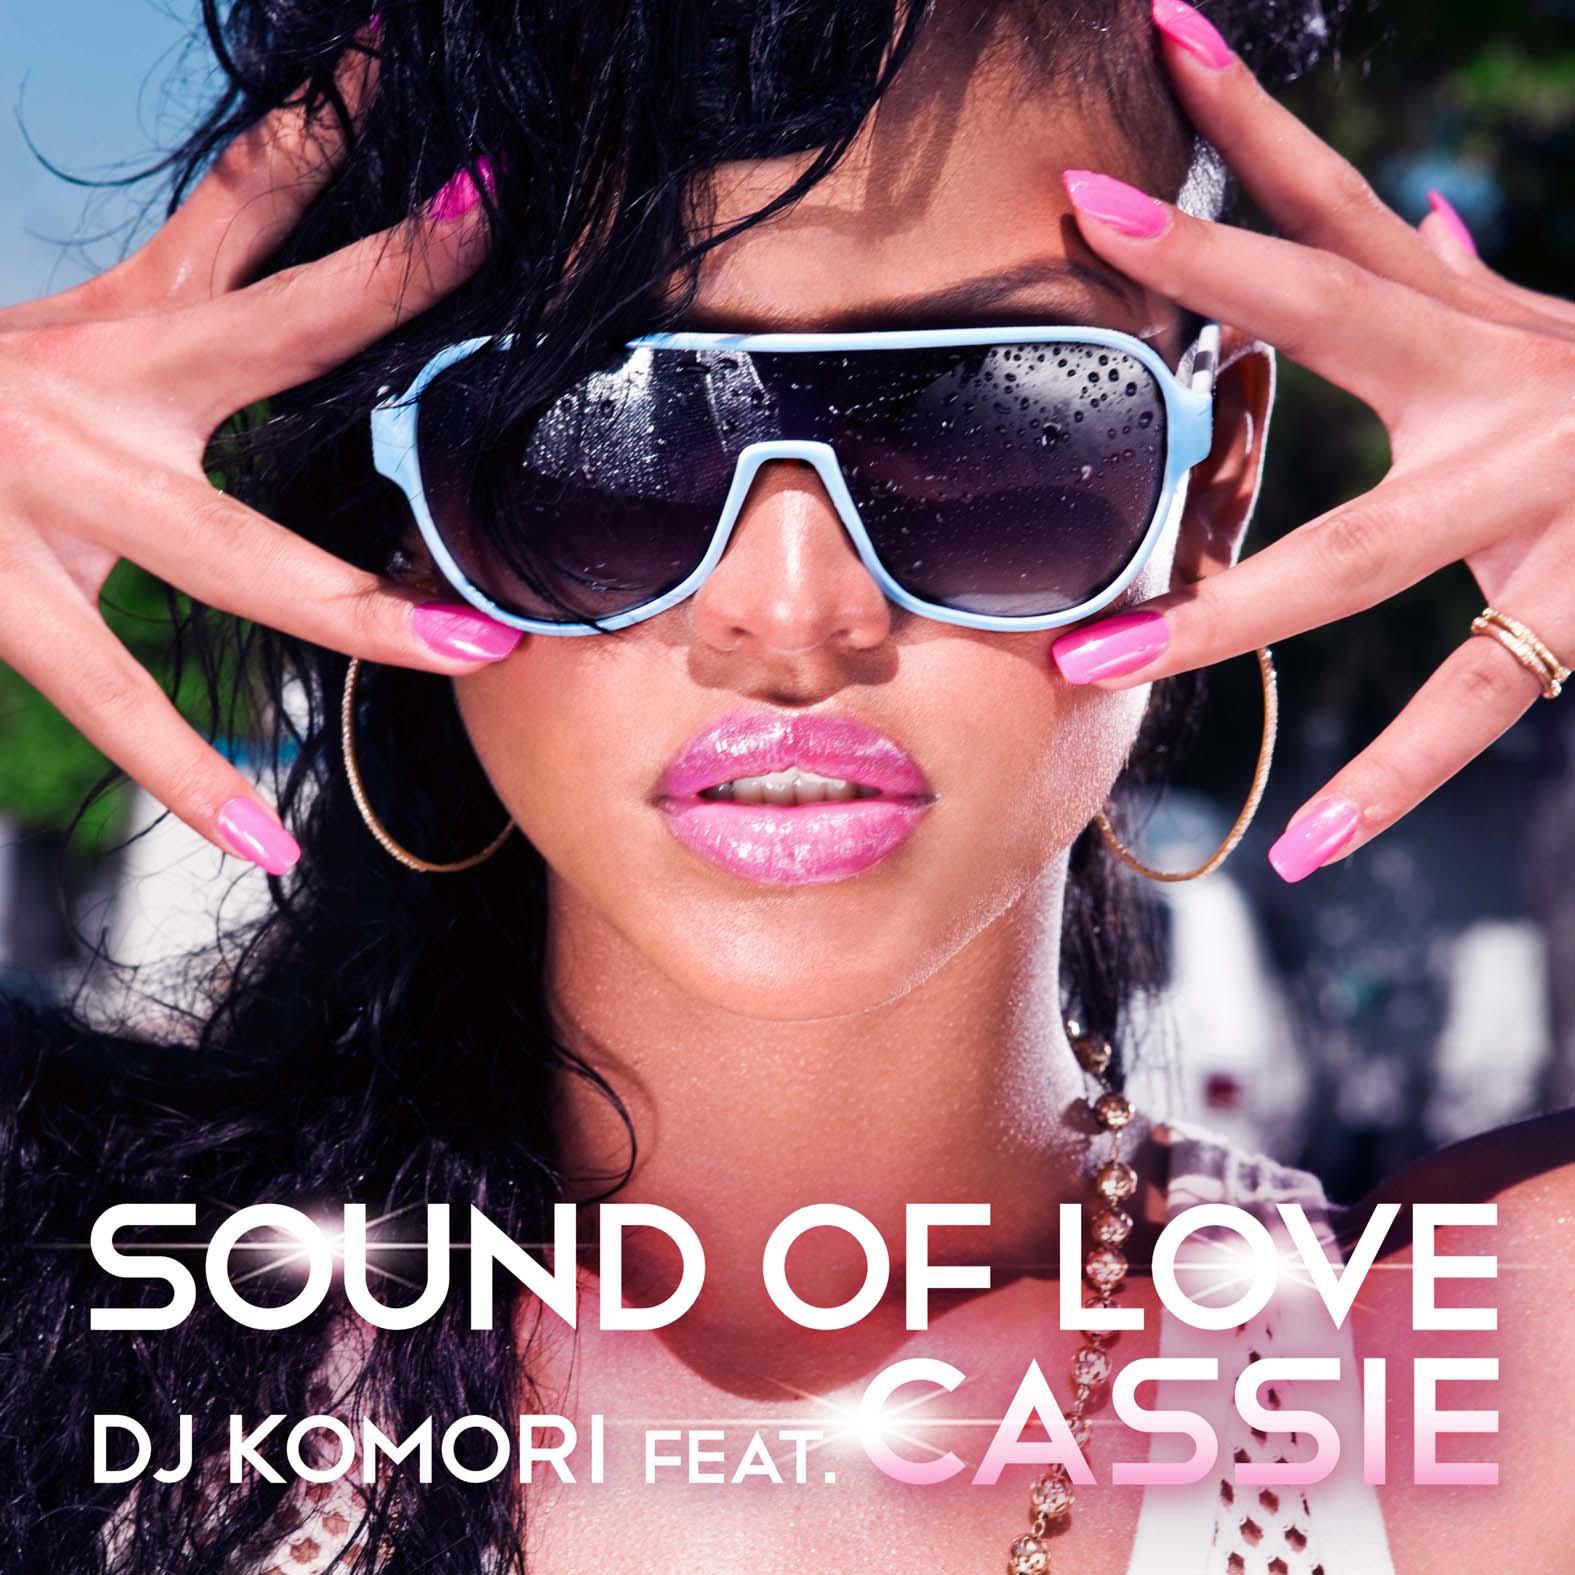 NOUVELLE CHANSON : DJ KOMORI feat. CASSIE